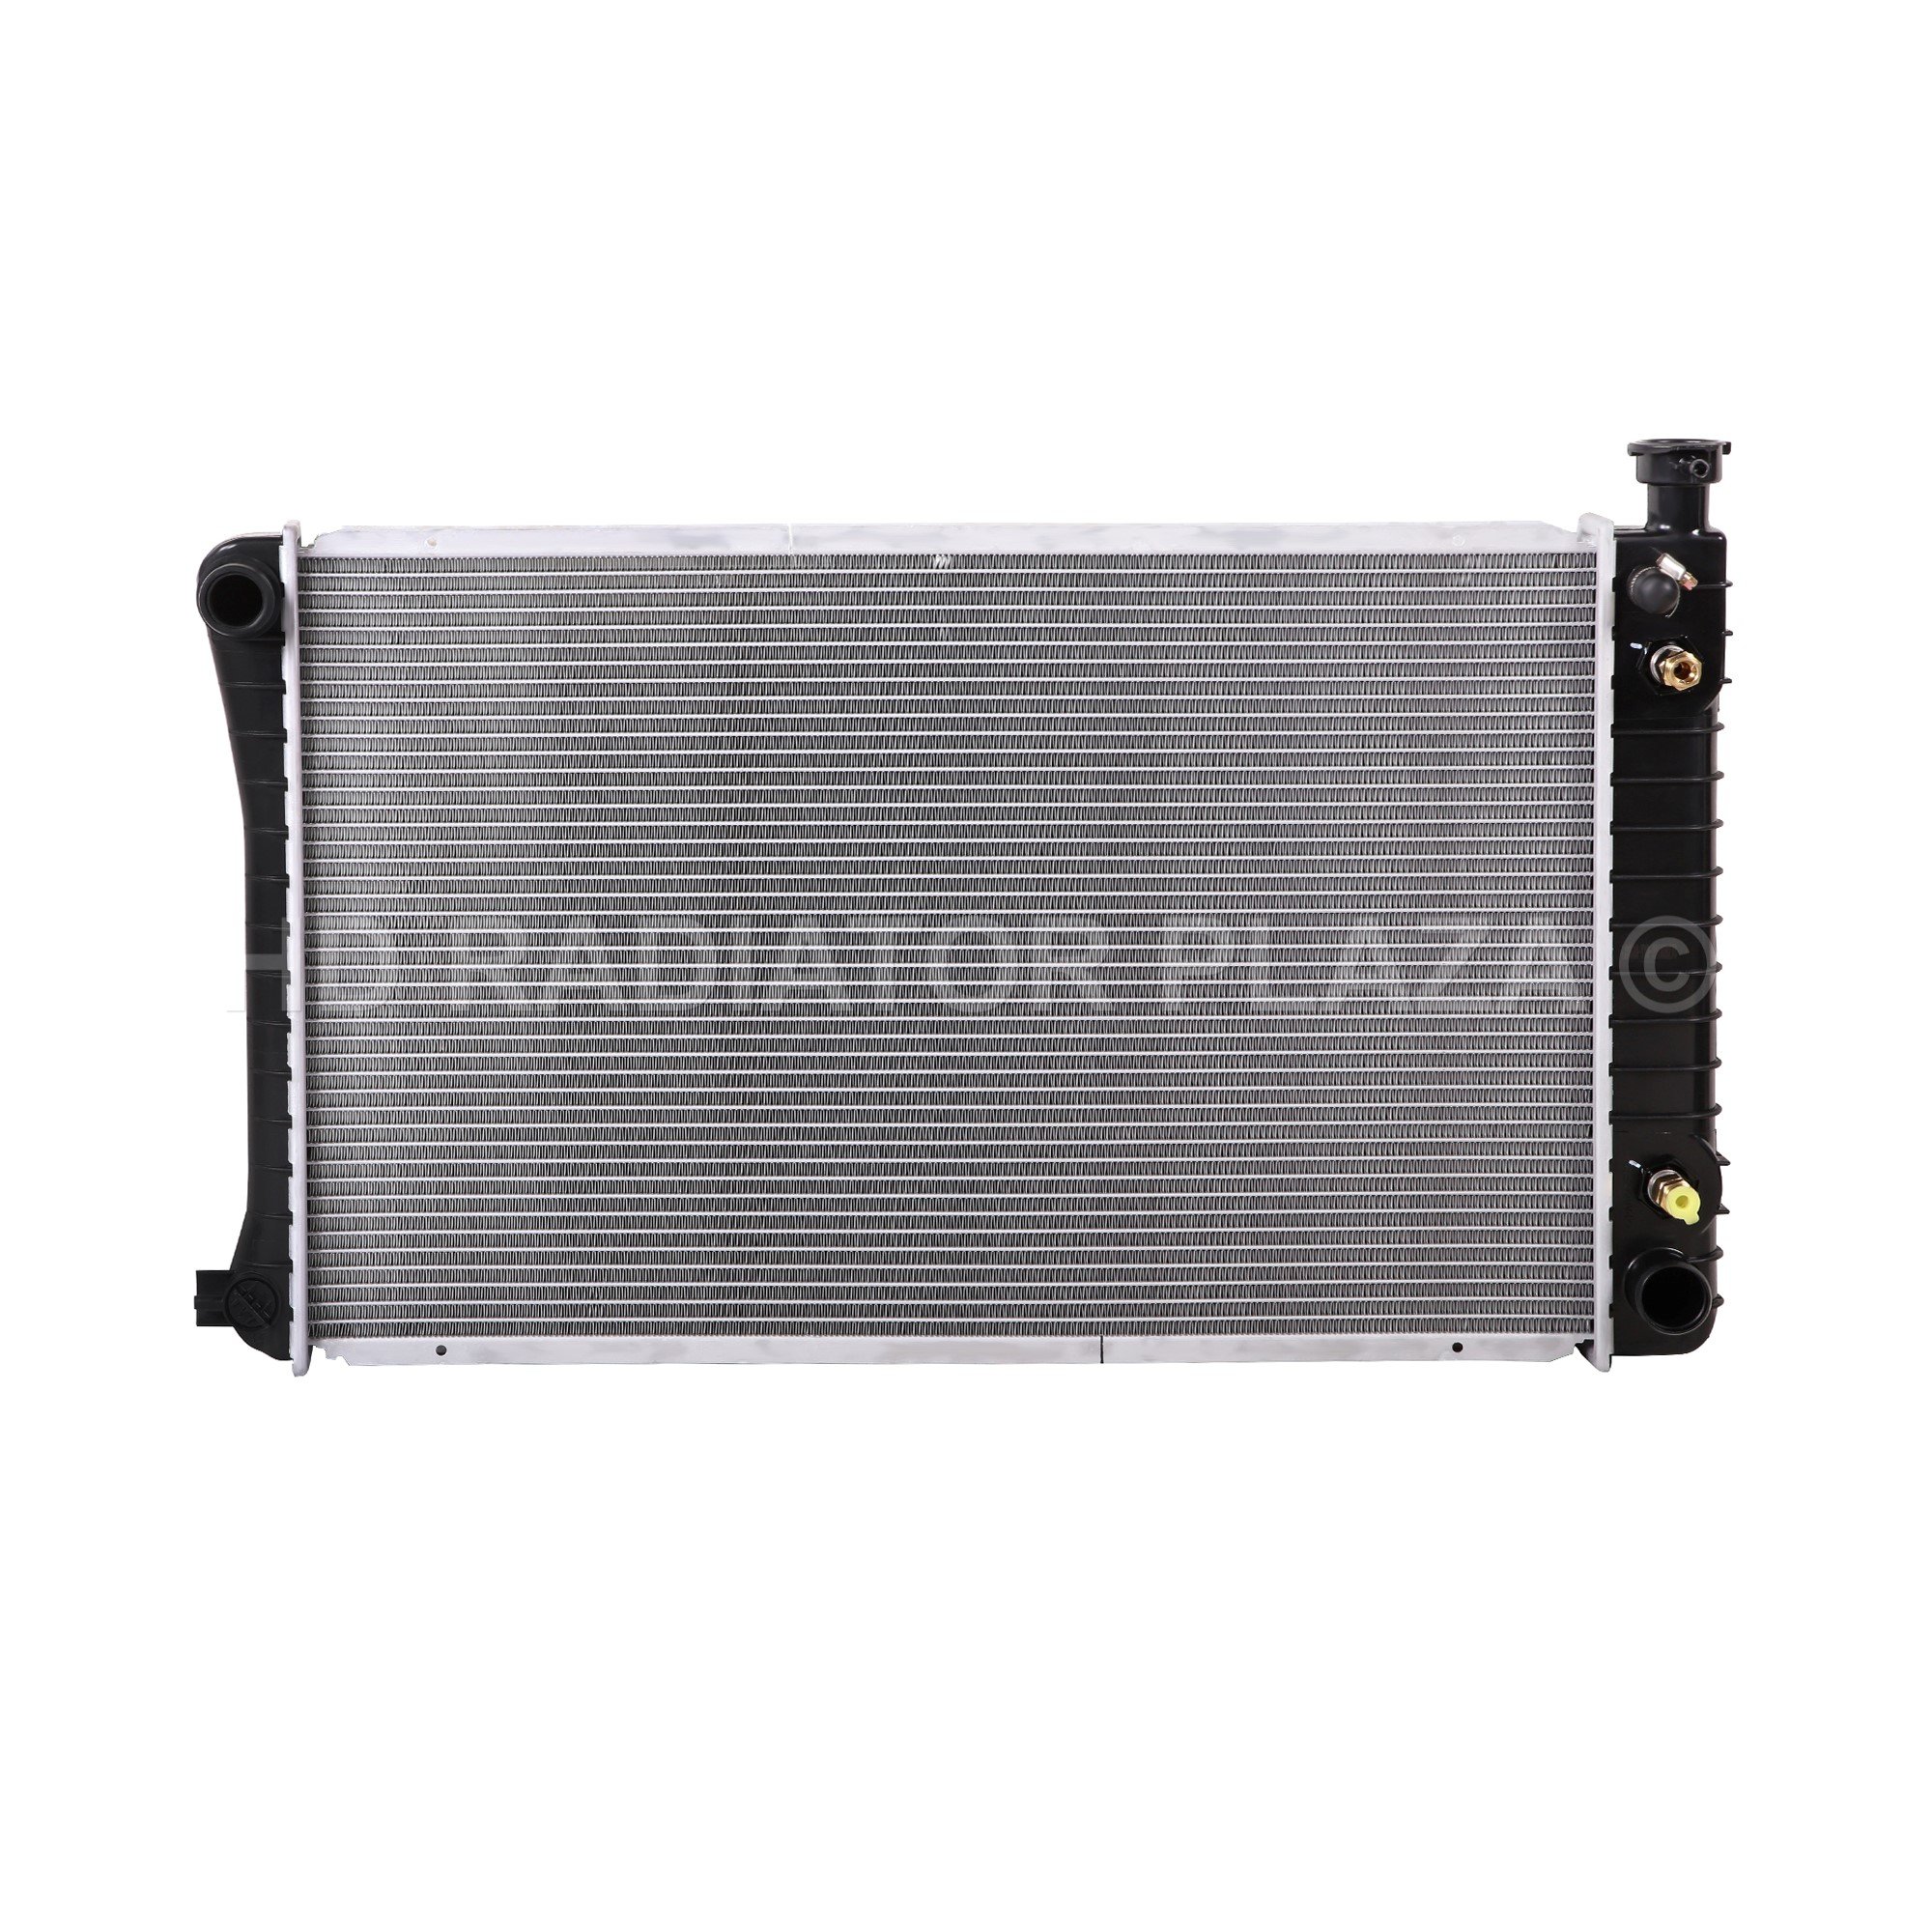 Radiator for 88-95 CHEVROLET PICKUPS /  GMC 1INCH TICK